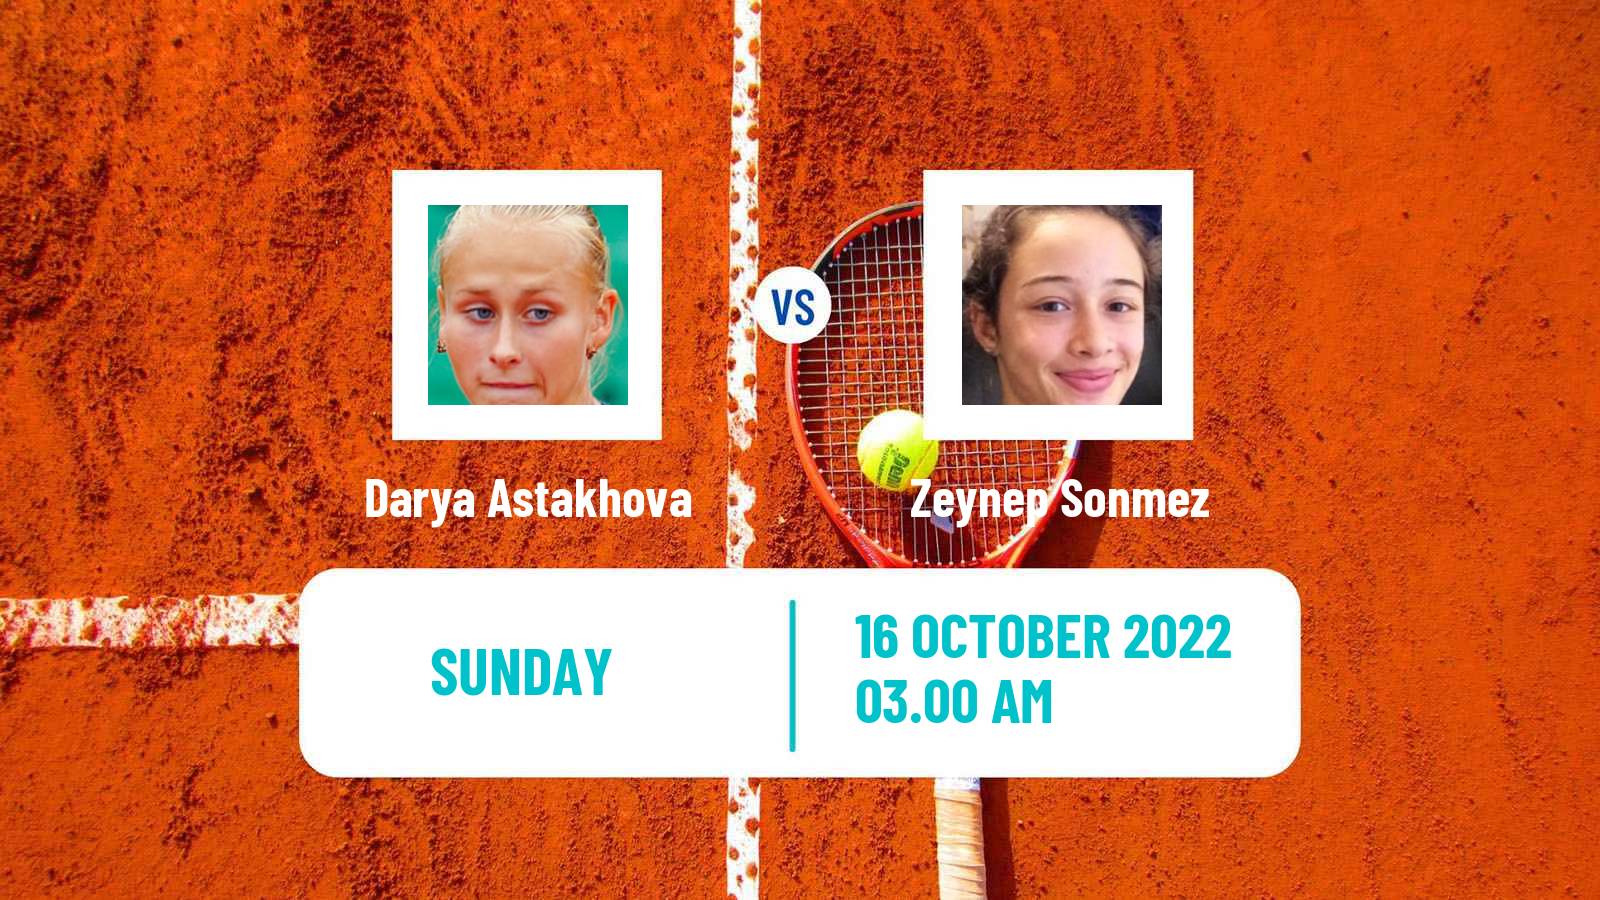 Tennis ITF Tournaments Darya Astakhova - Zeynep Sonmez